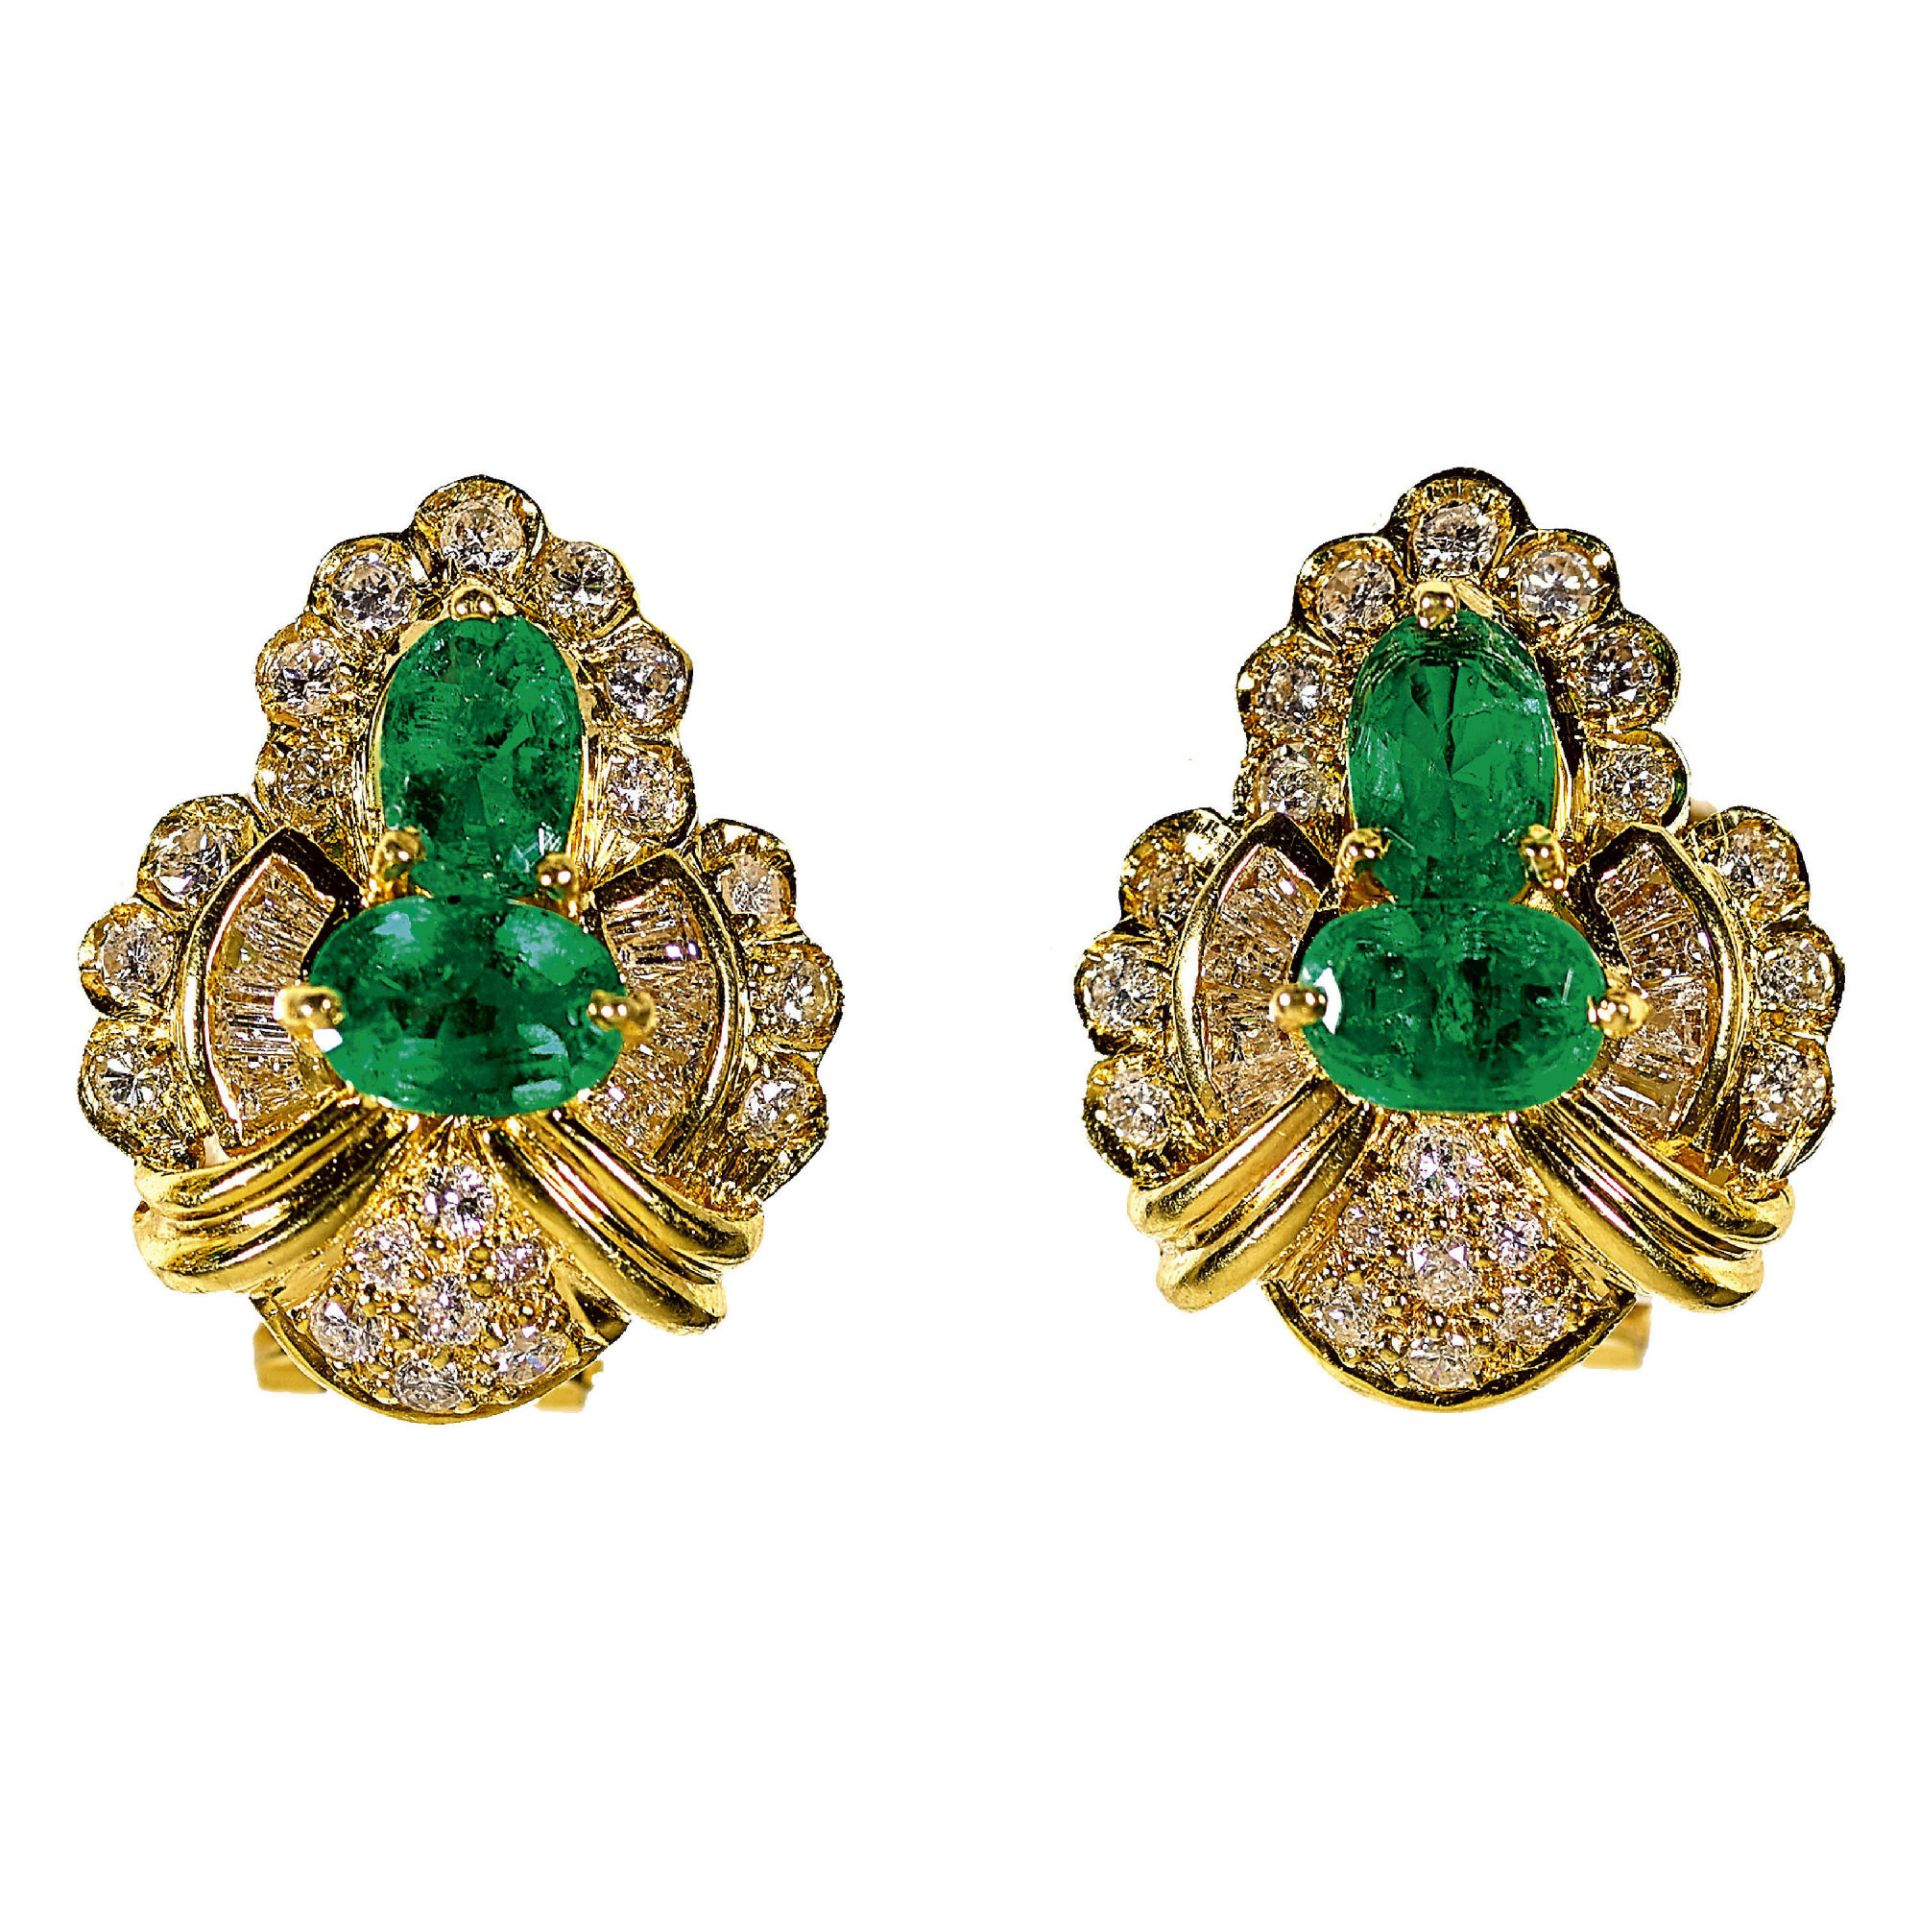 SMARAGD-DIAMANT-OHRSTECKER / Emerald-diamond earrings